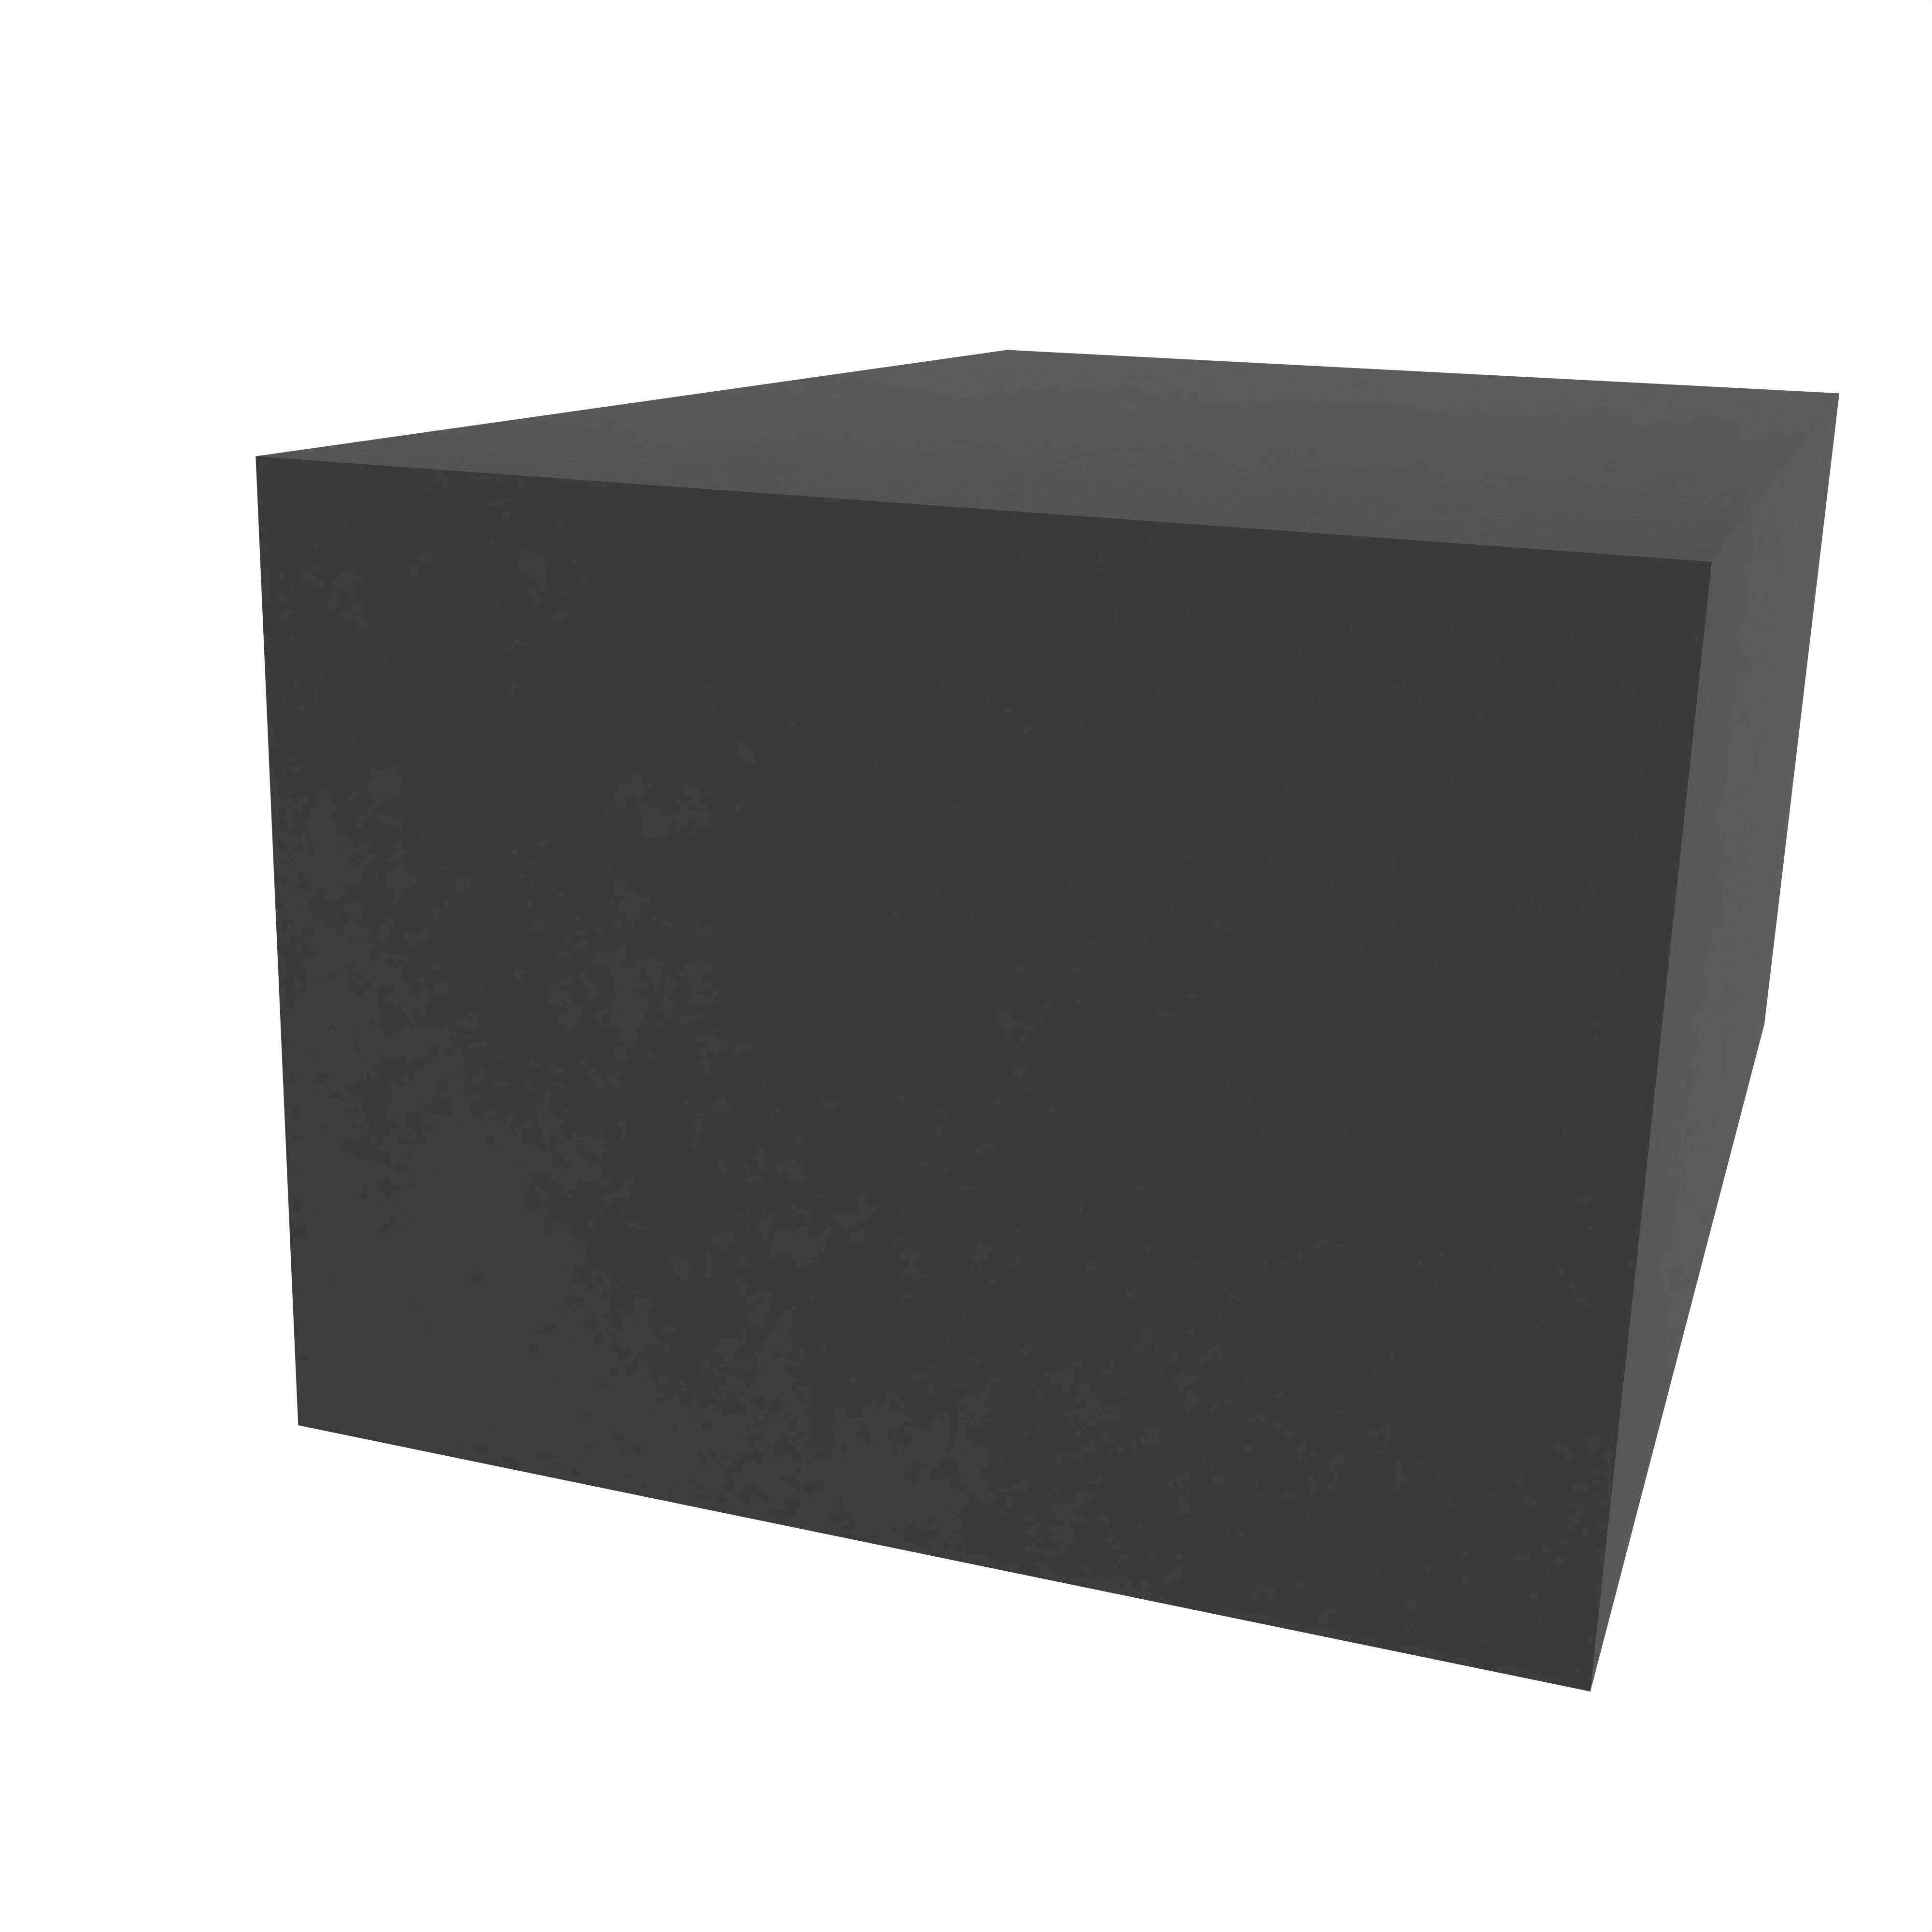 Moosgummidichtung vierkant | 30 mm Höhe | Farbe: schwarz